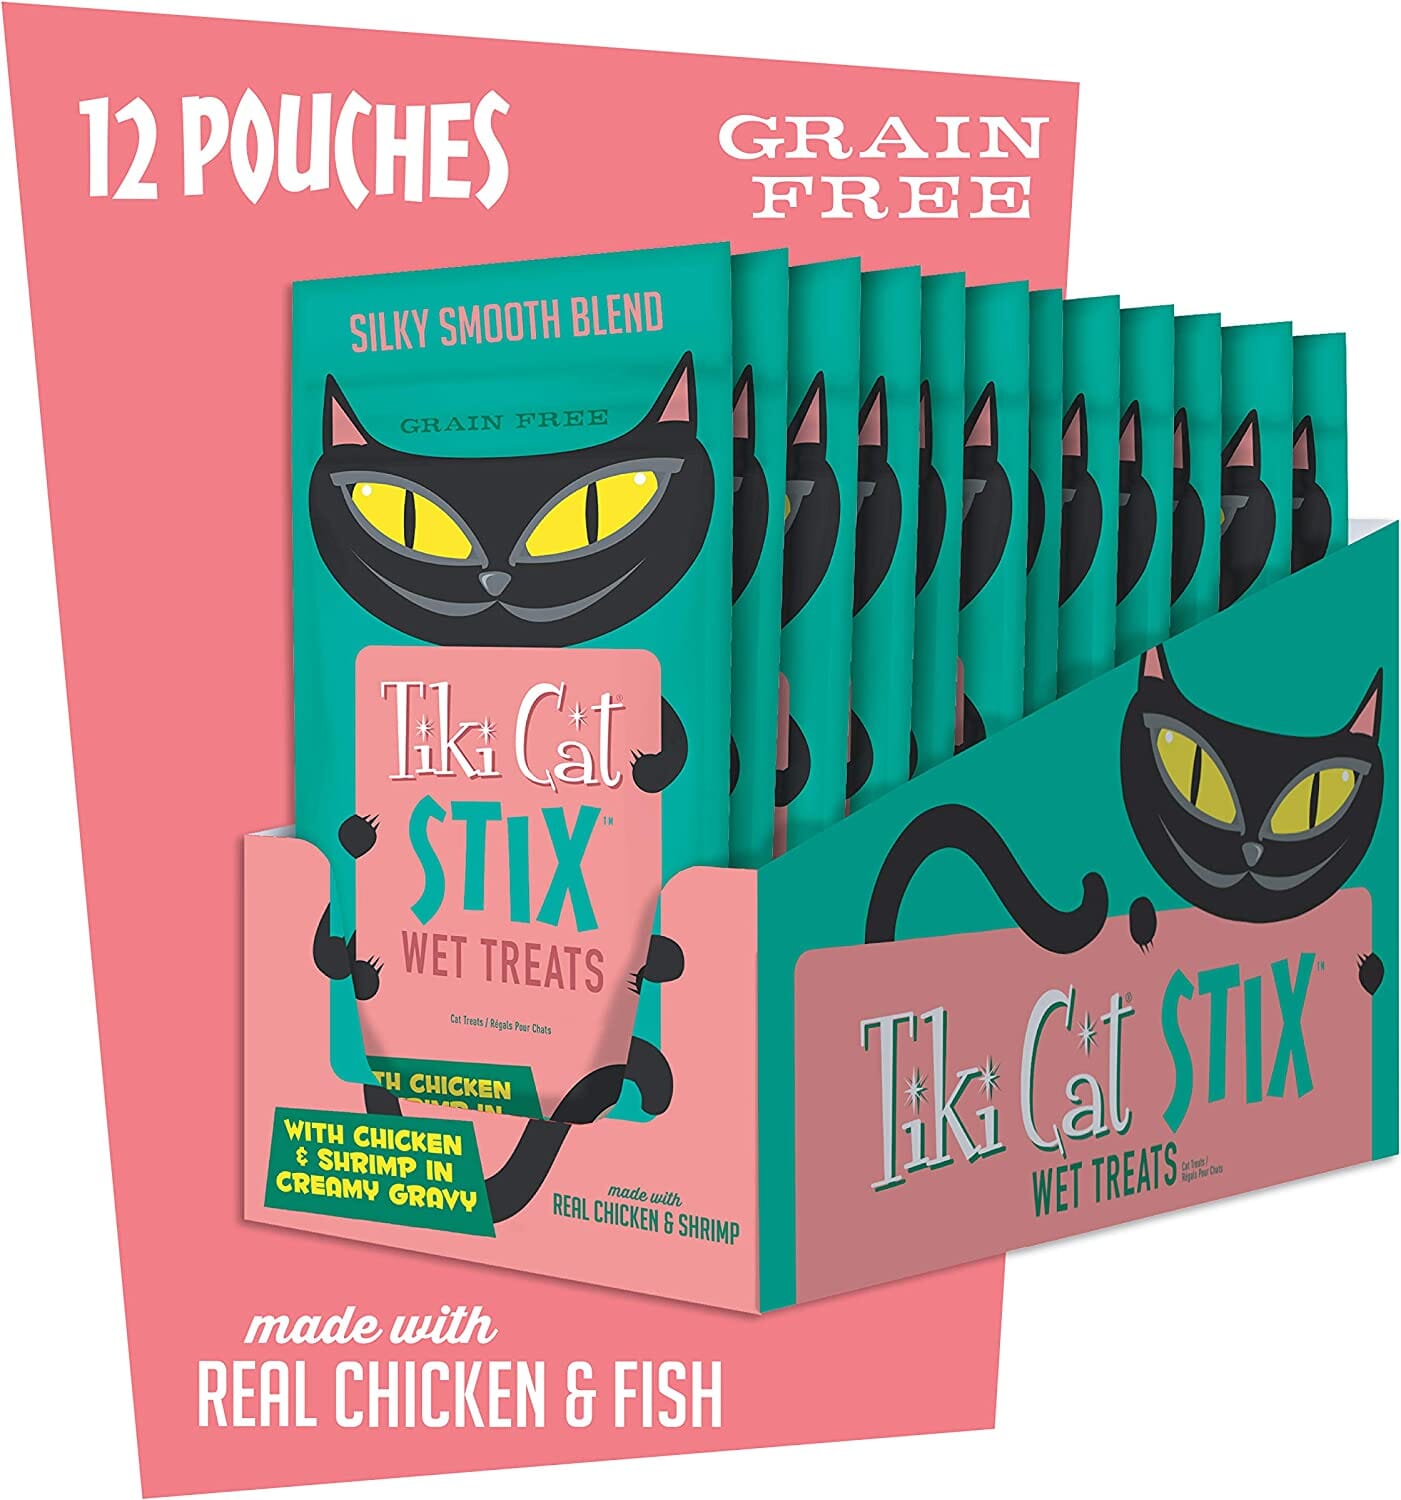 Tiki Cat Chicken & Shrimp Mousse STIX™ Cat Treats - (6 Tubes per Bag) - 3 Oz Bags - Pack of 12  